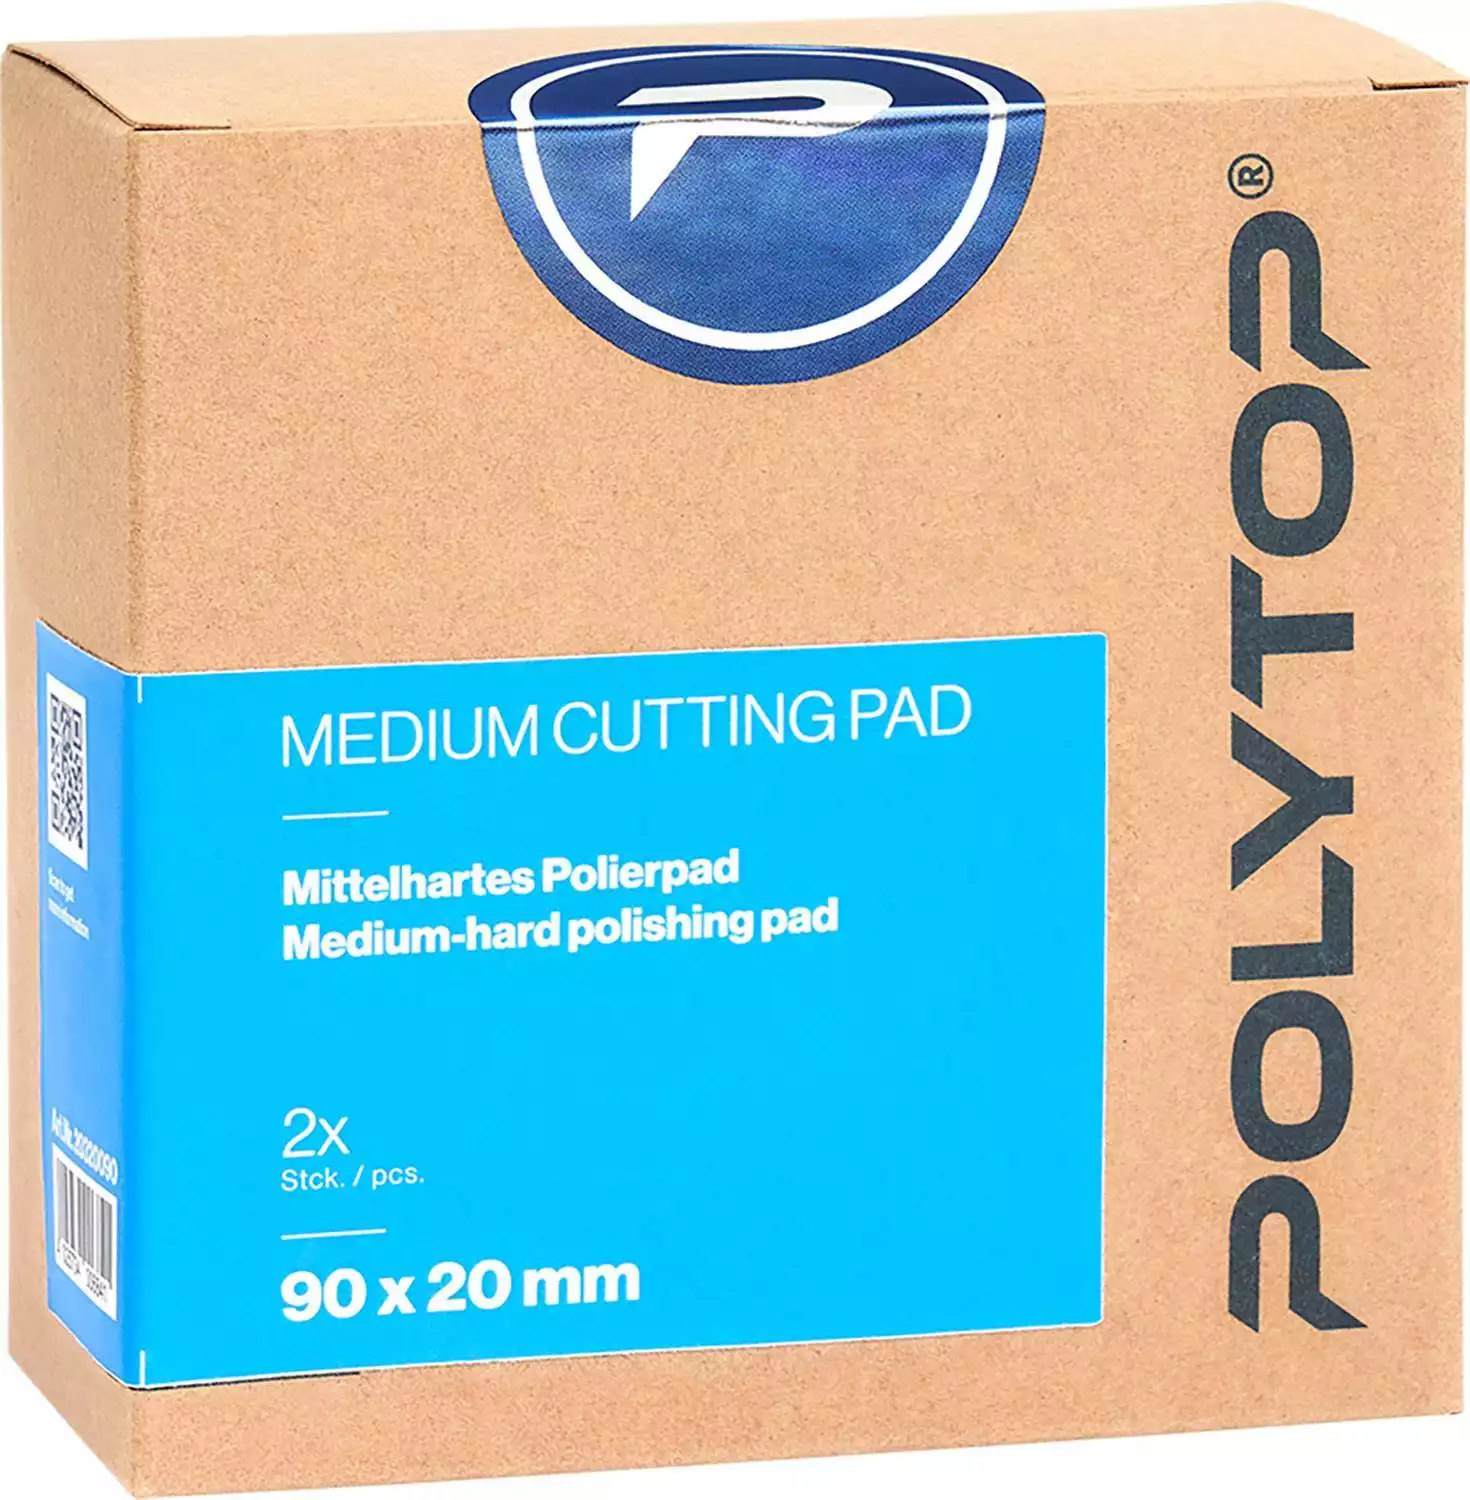 Medium Cutting Pad blau 90 x 20 mm, 2er Pack